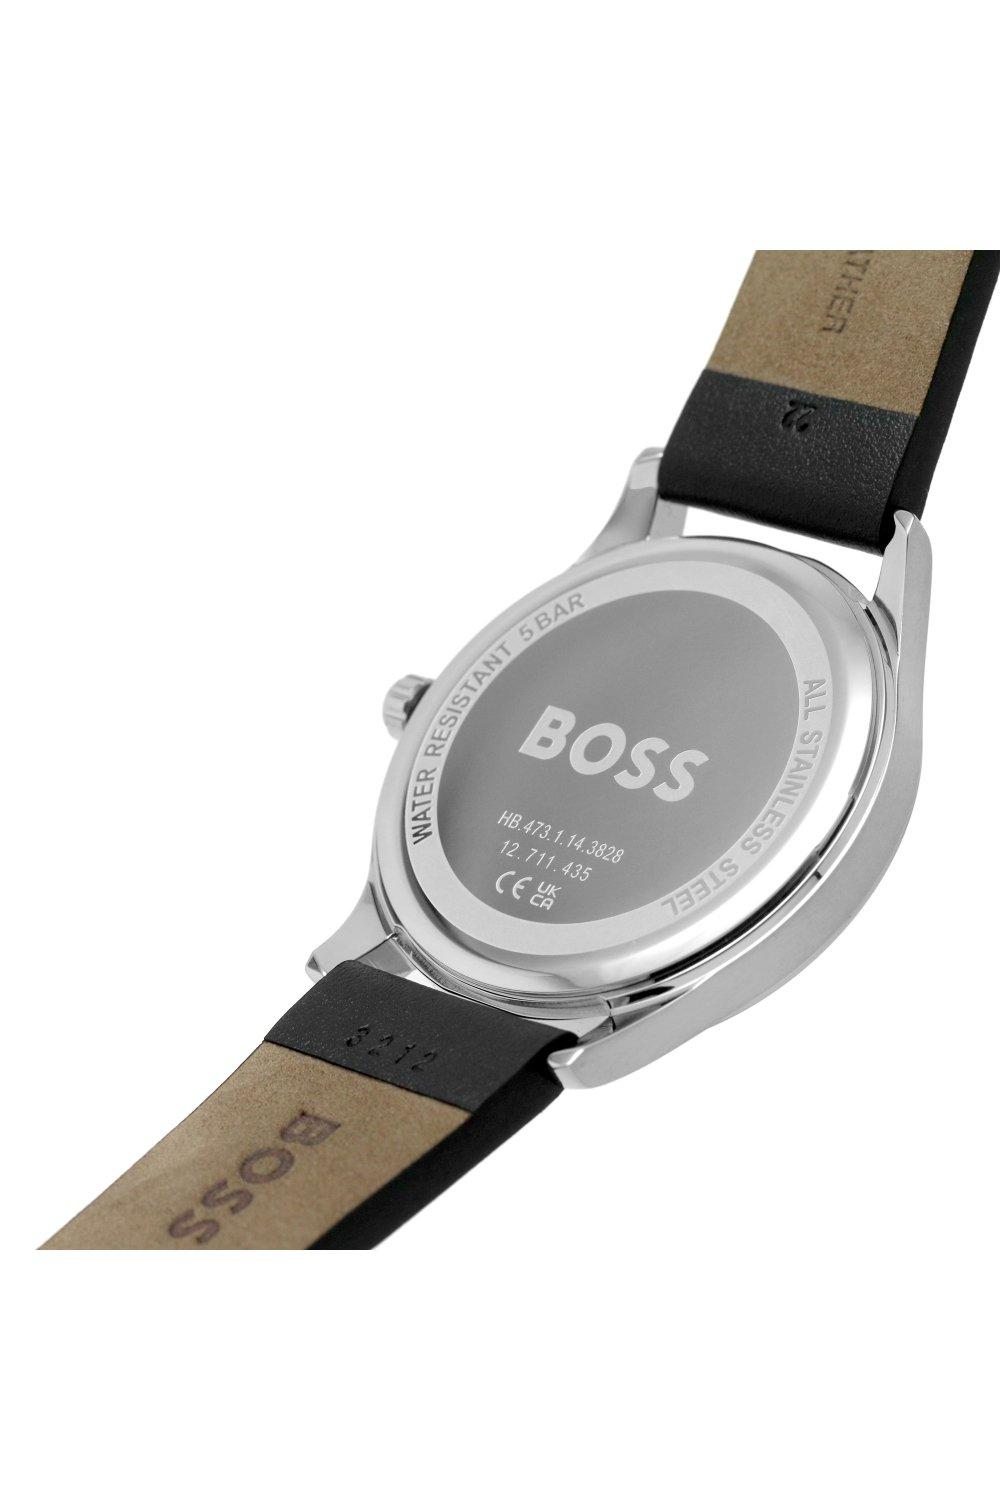 Watch Quartz Watches | Stainless - Reason BOSS Analogue | 1513981 Steel Fashion